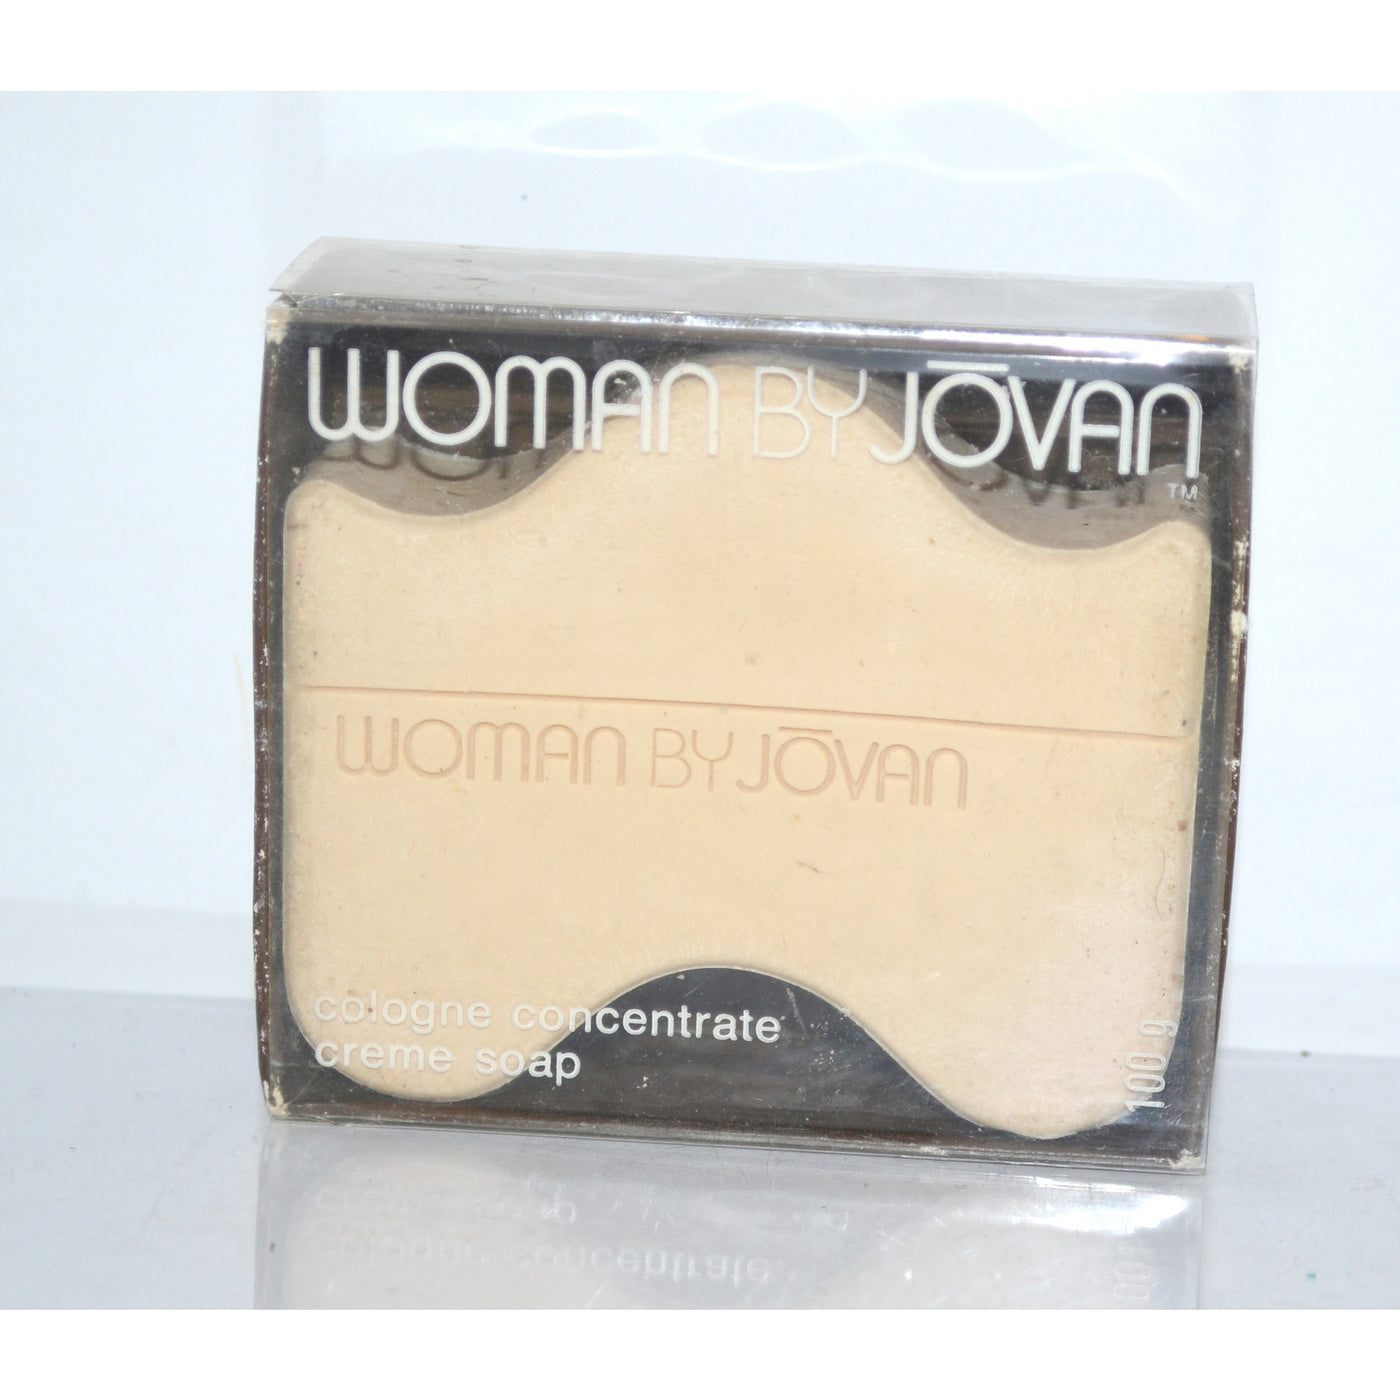 Vintage Woman Cologne Creme Soap By Jovan 